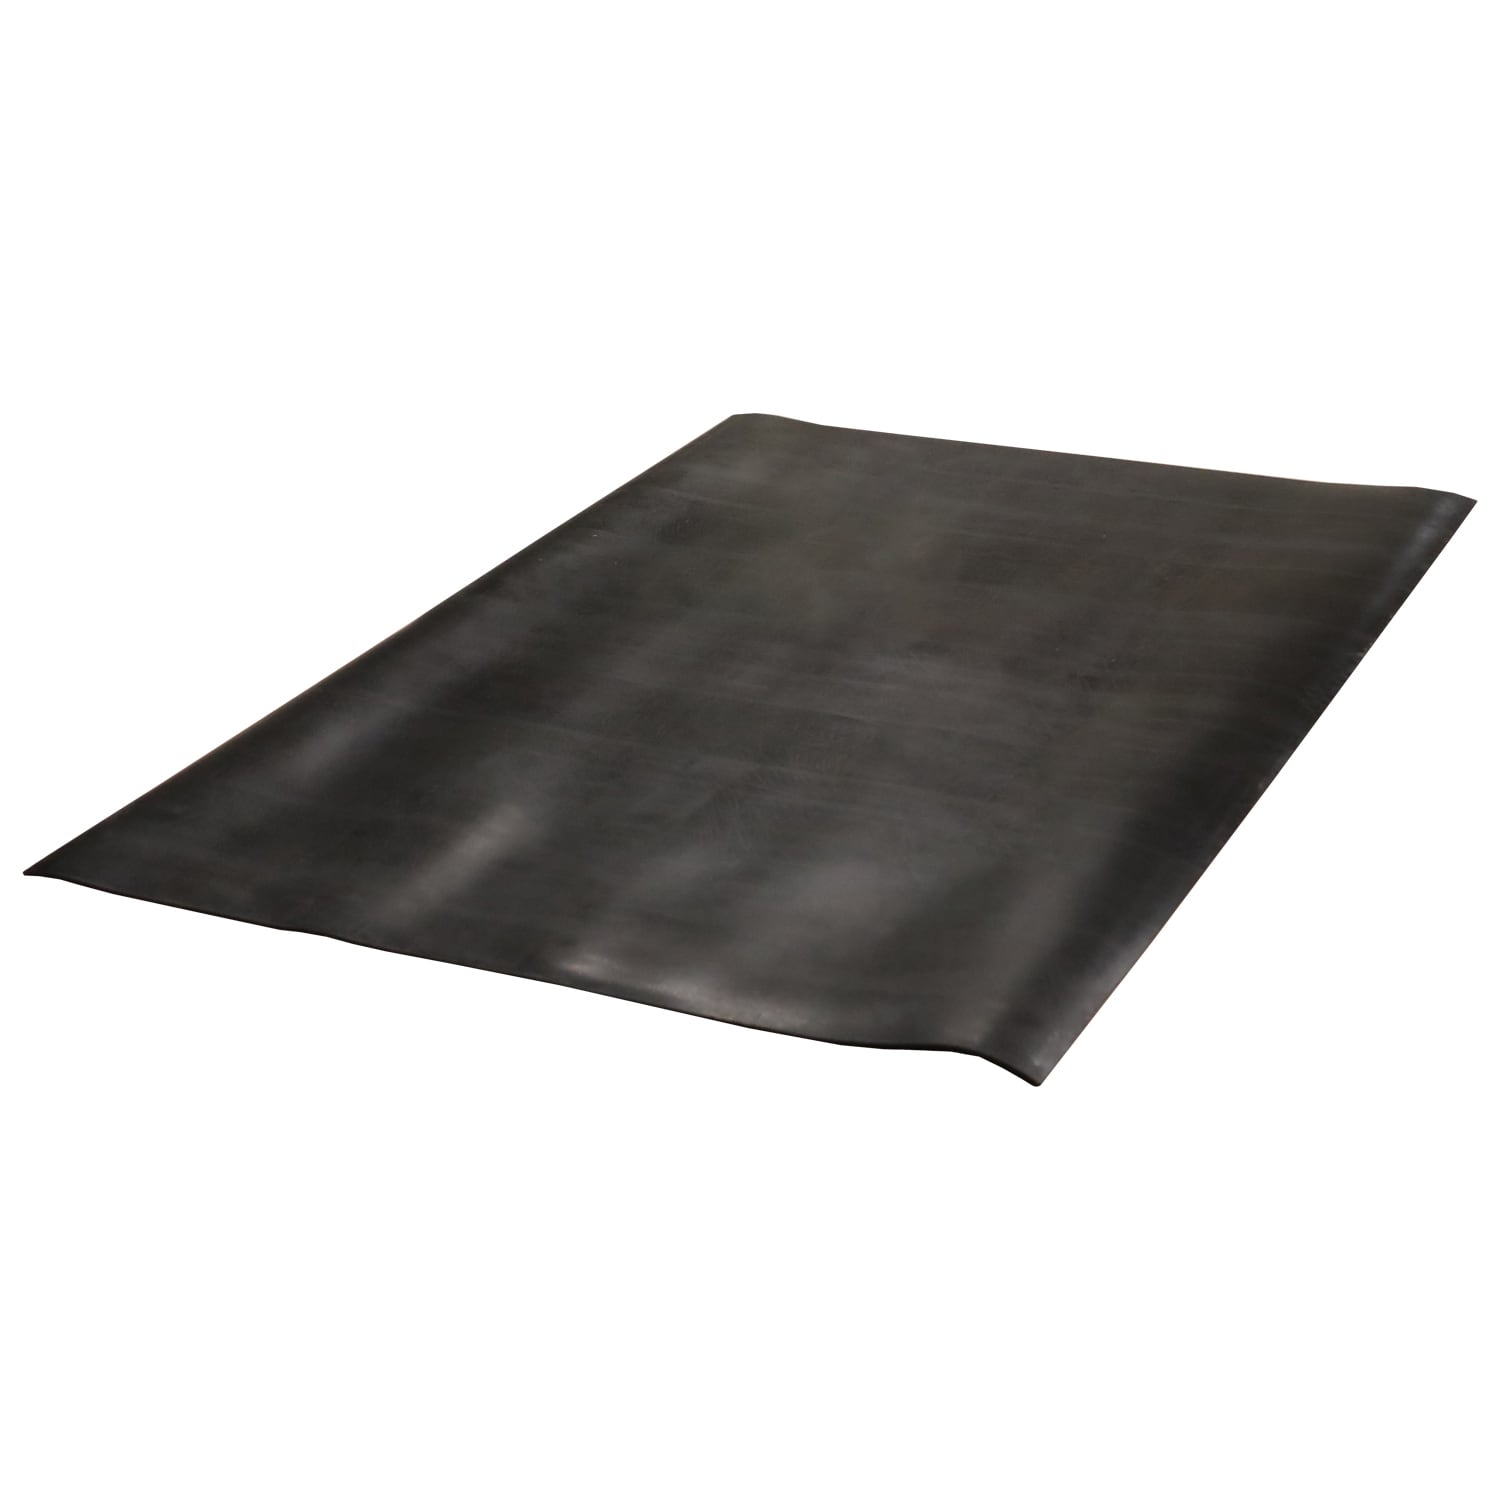 Walser Rubber mat “Rectangle” in Black